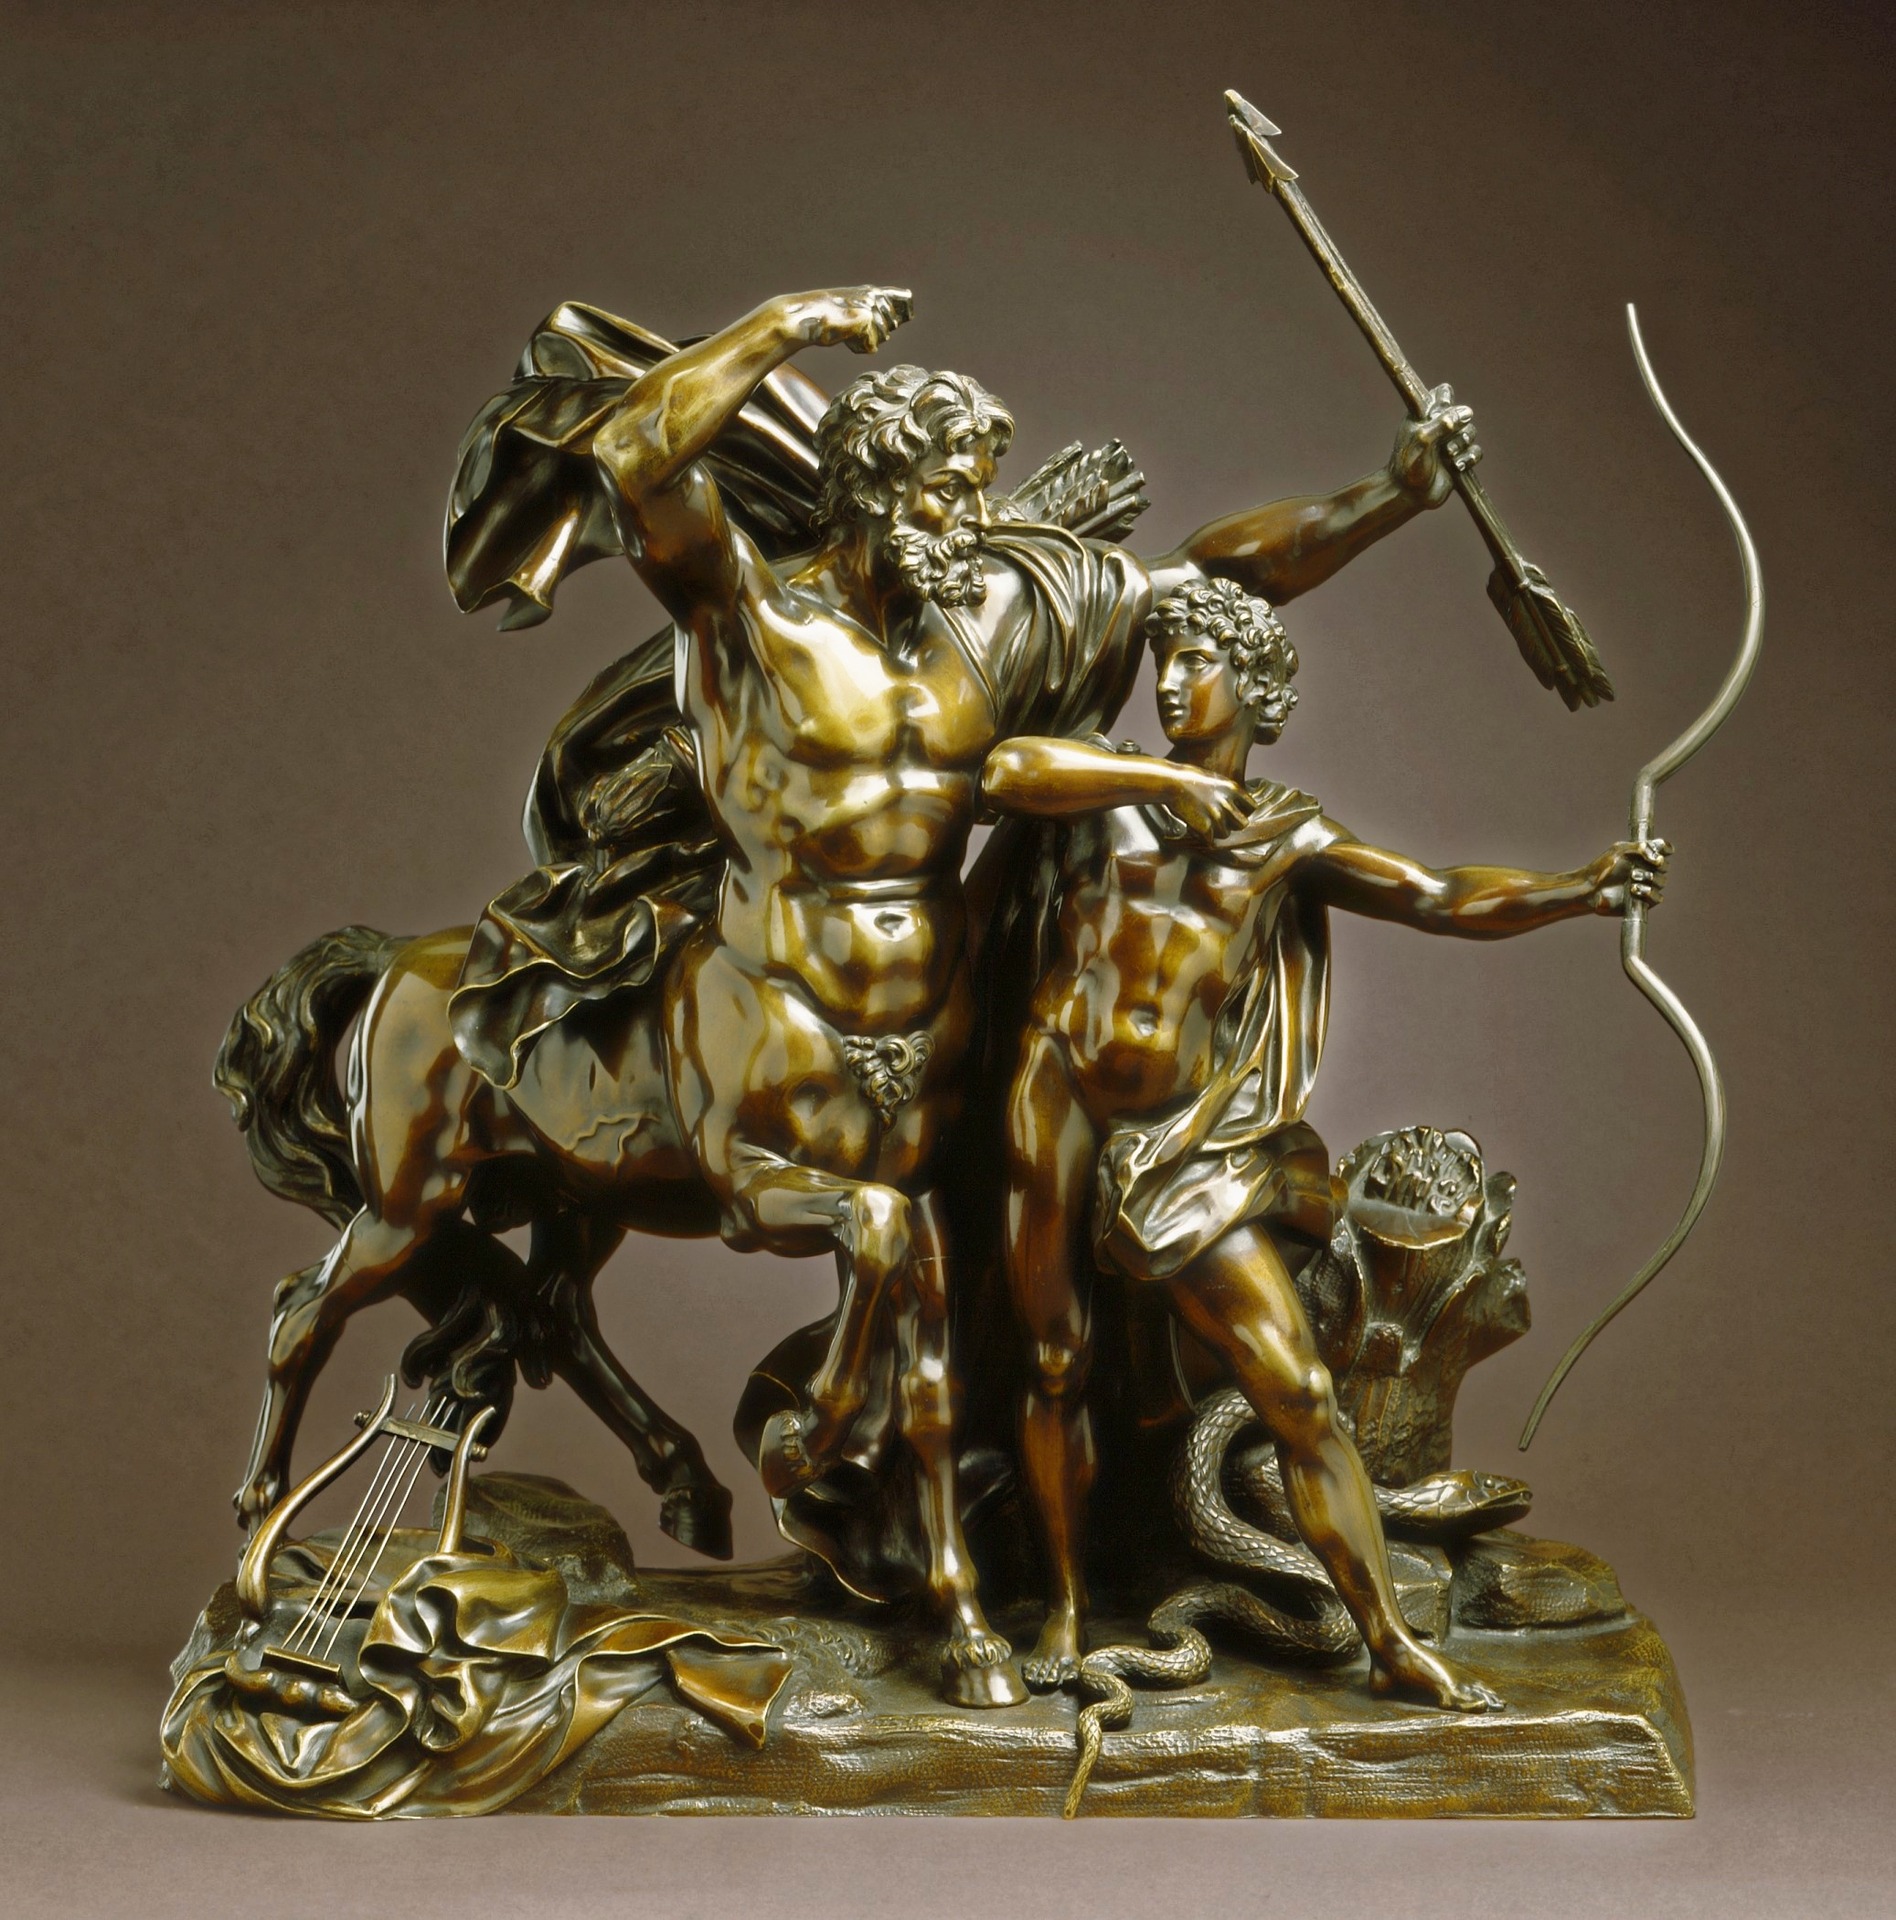 bronze-sculpture-939770_1920.jpg